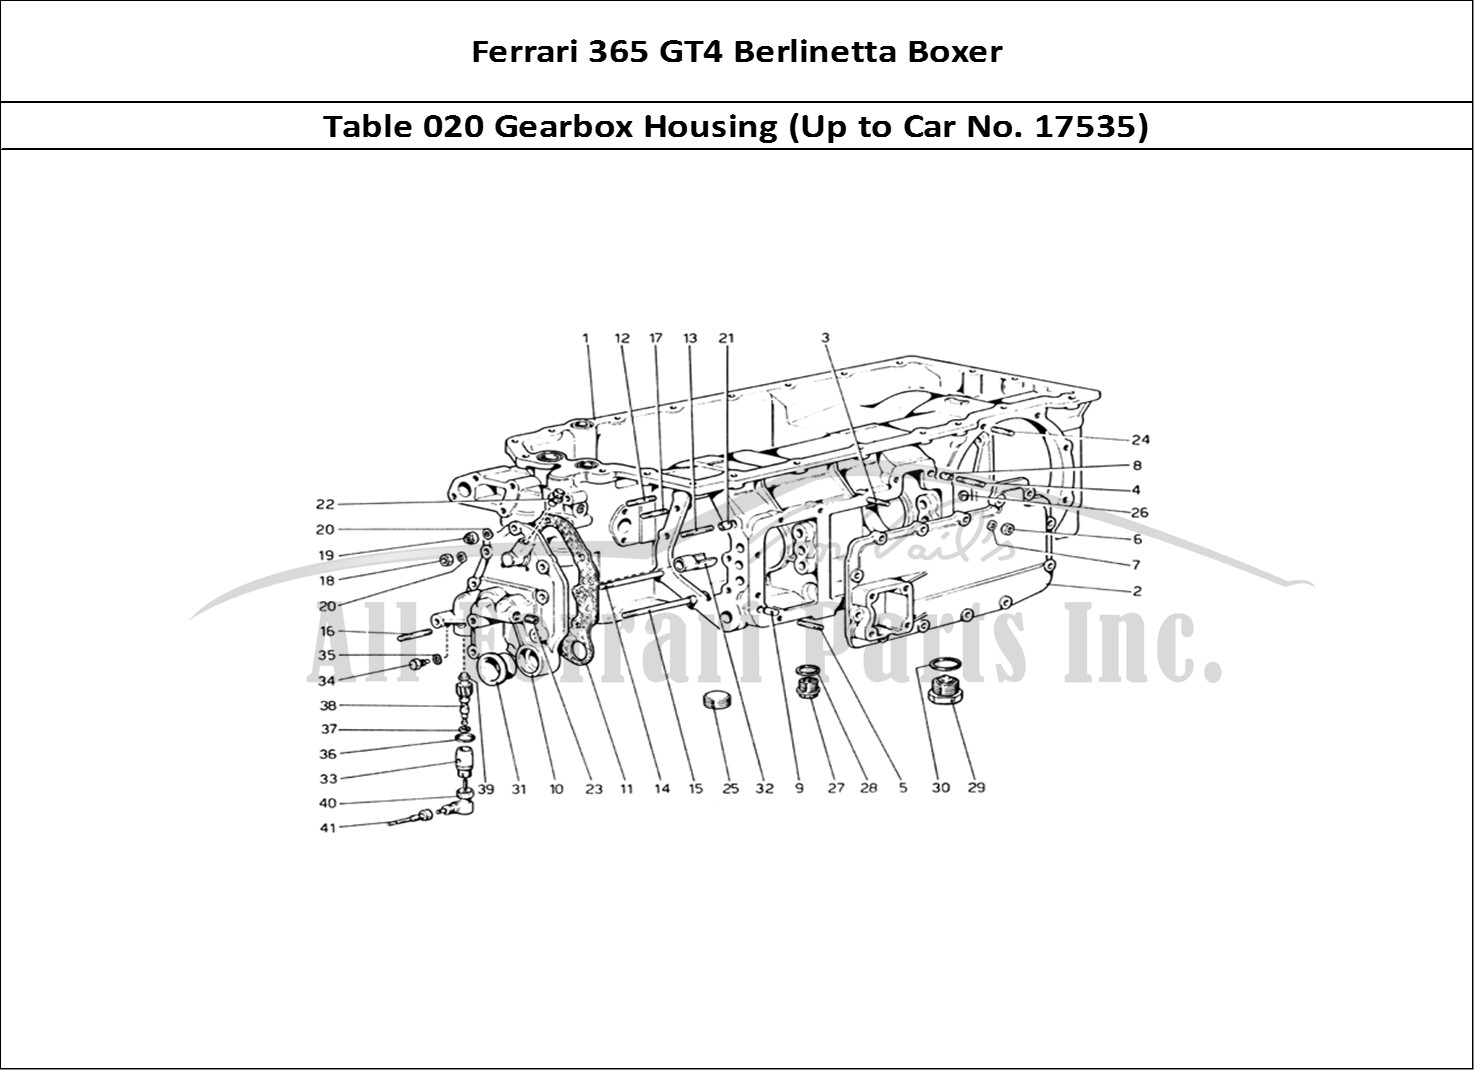 Ferrari Parts Ferrari 365 GT4 Berlinetta Boxer Page 020 Gearbox (Up To Car No. 17